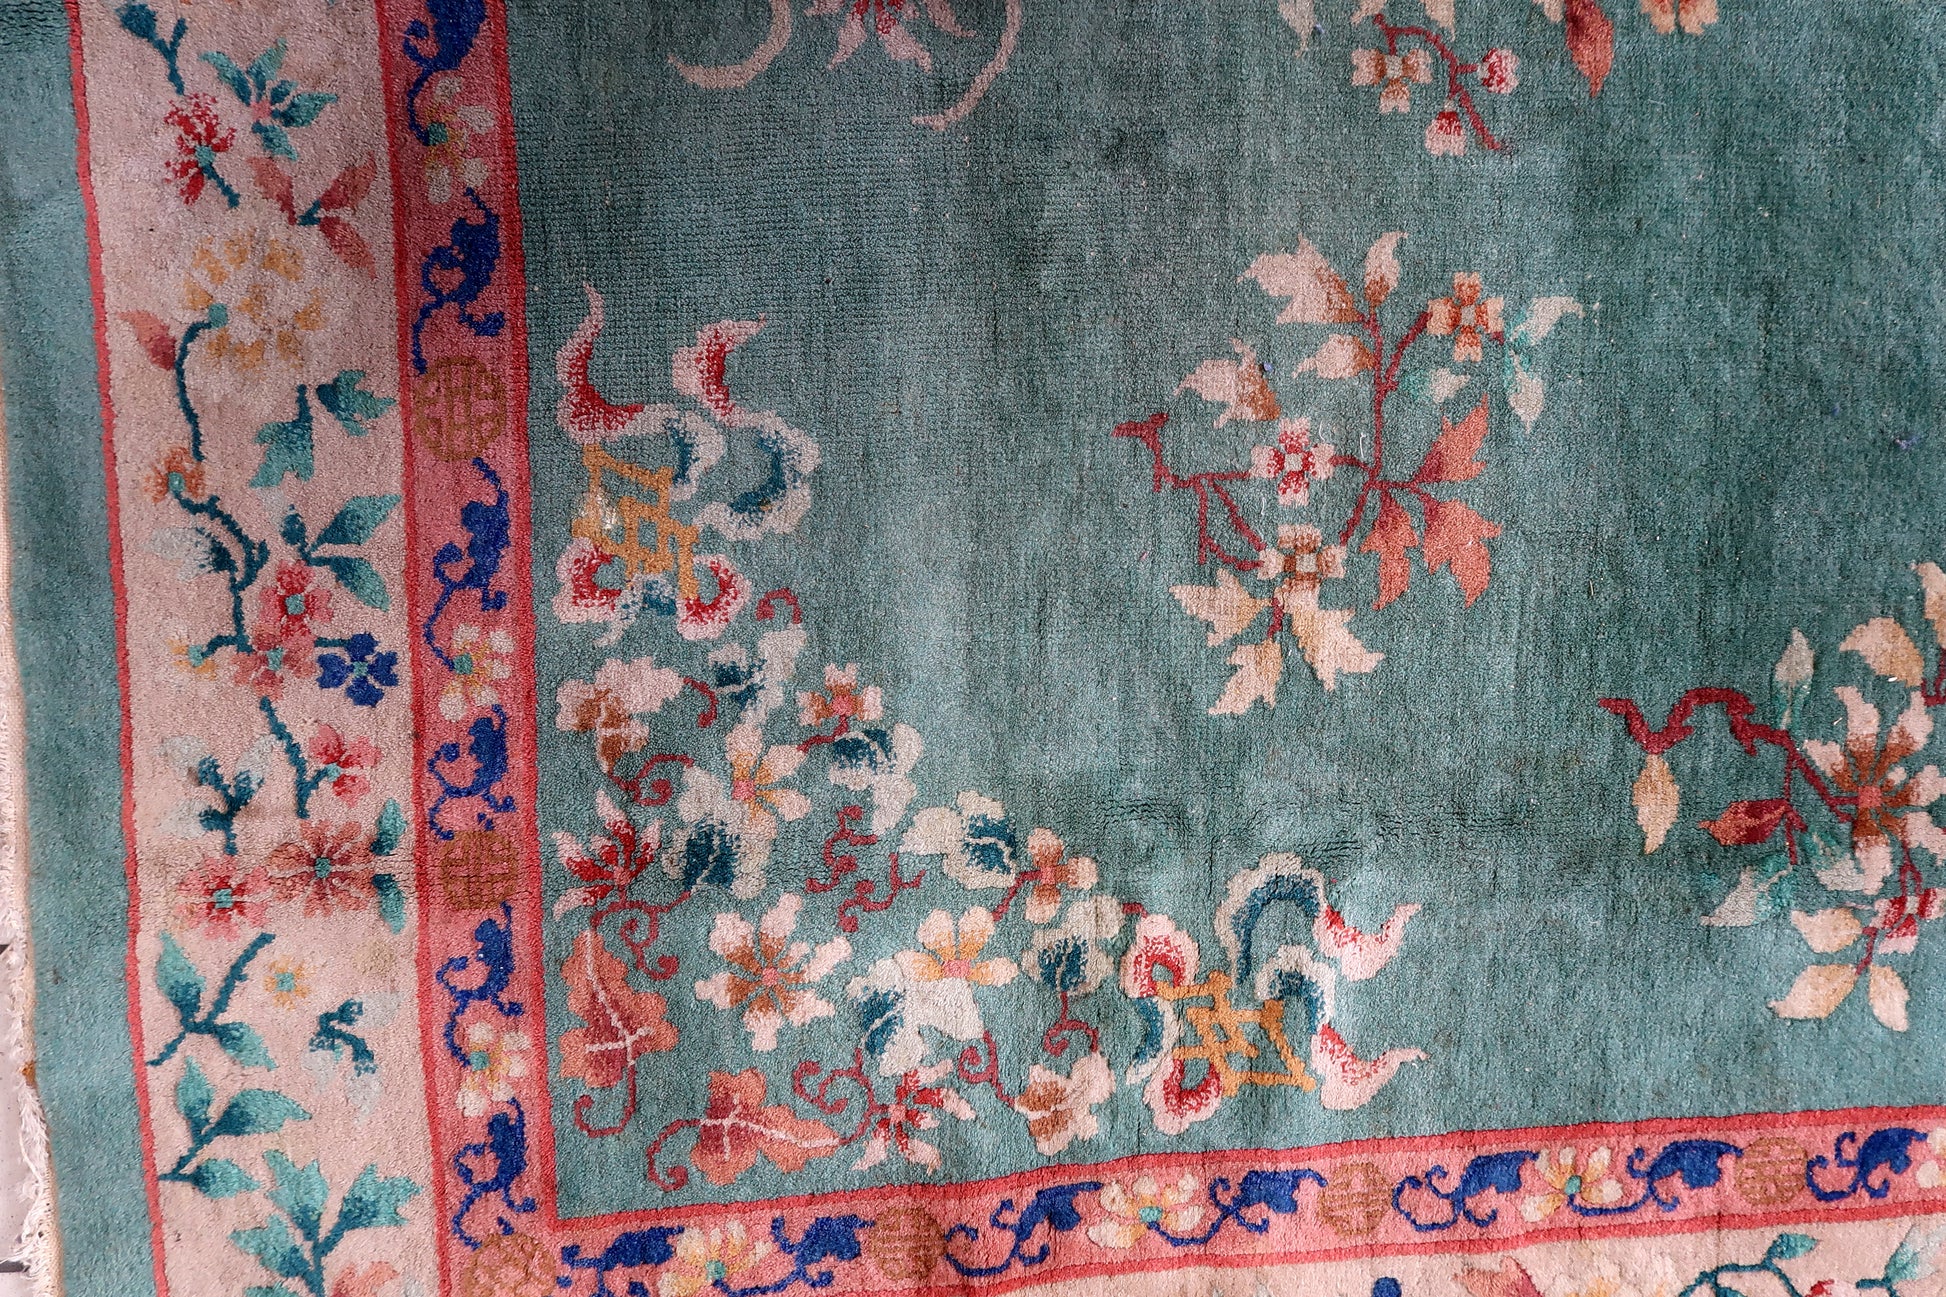 A corner of the rug showcasing its classic design.